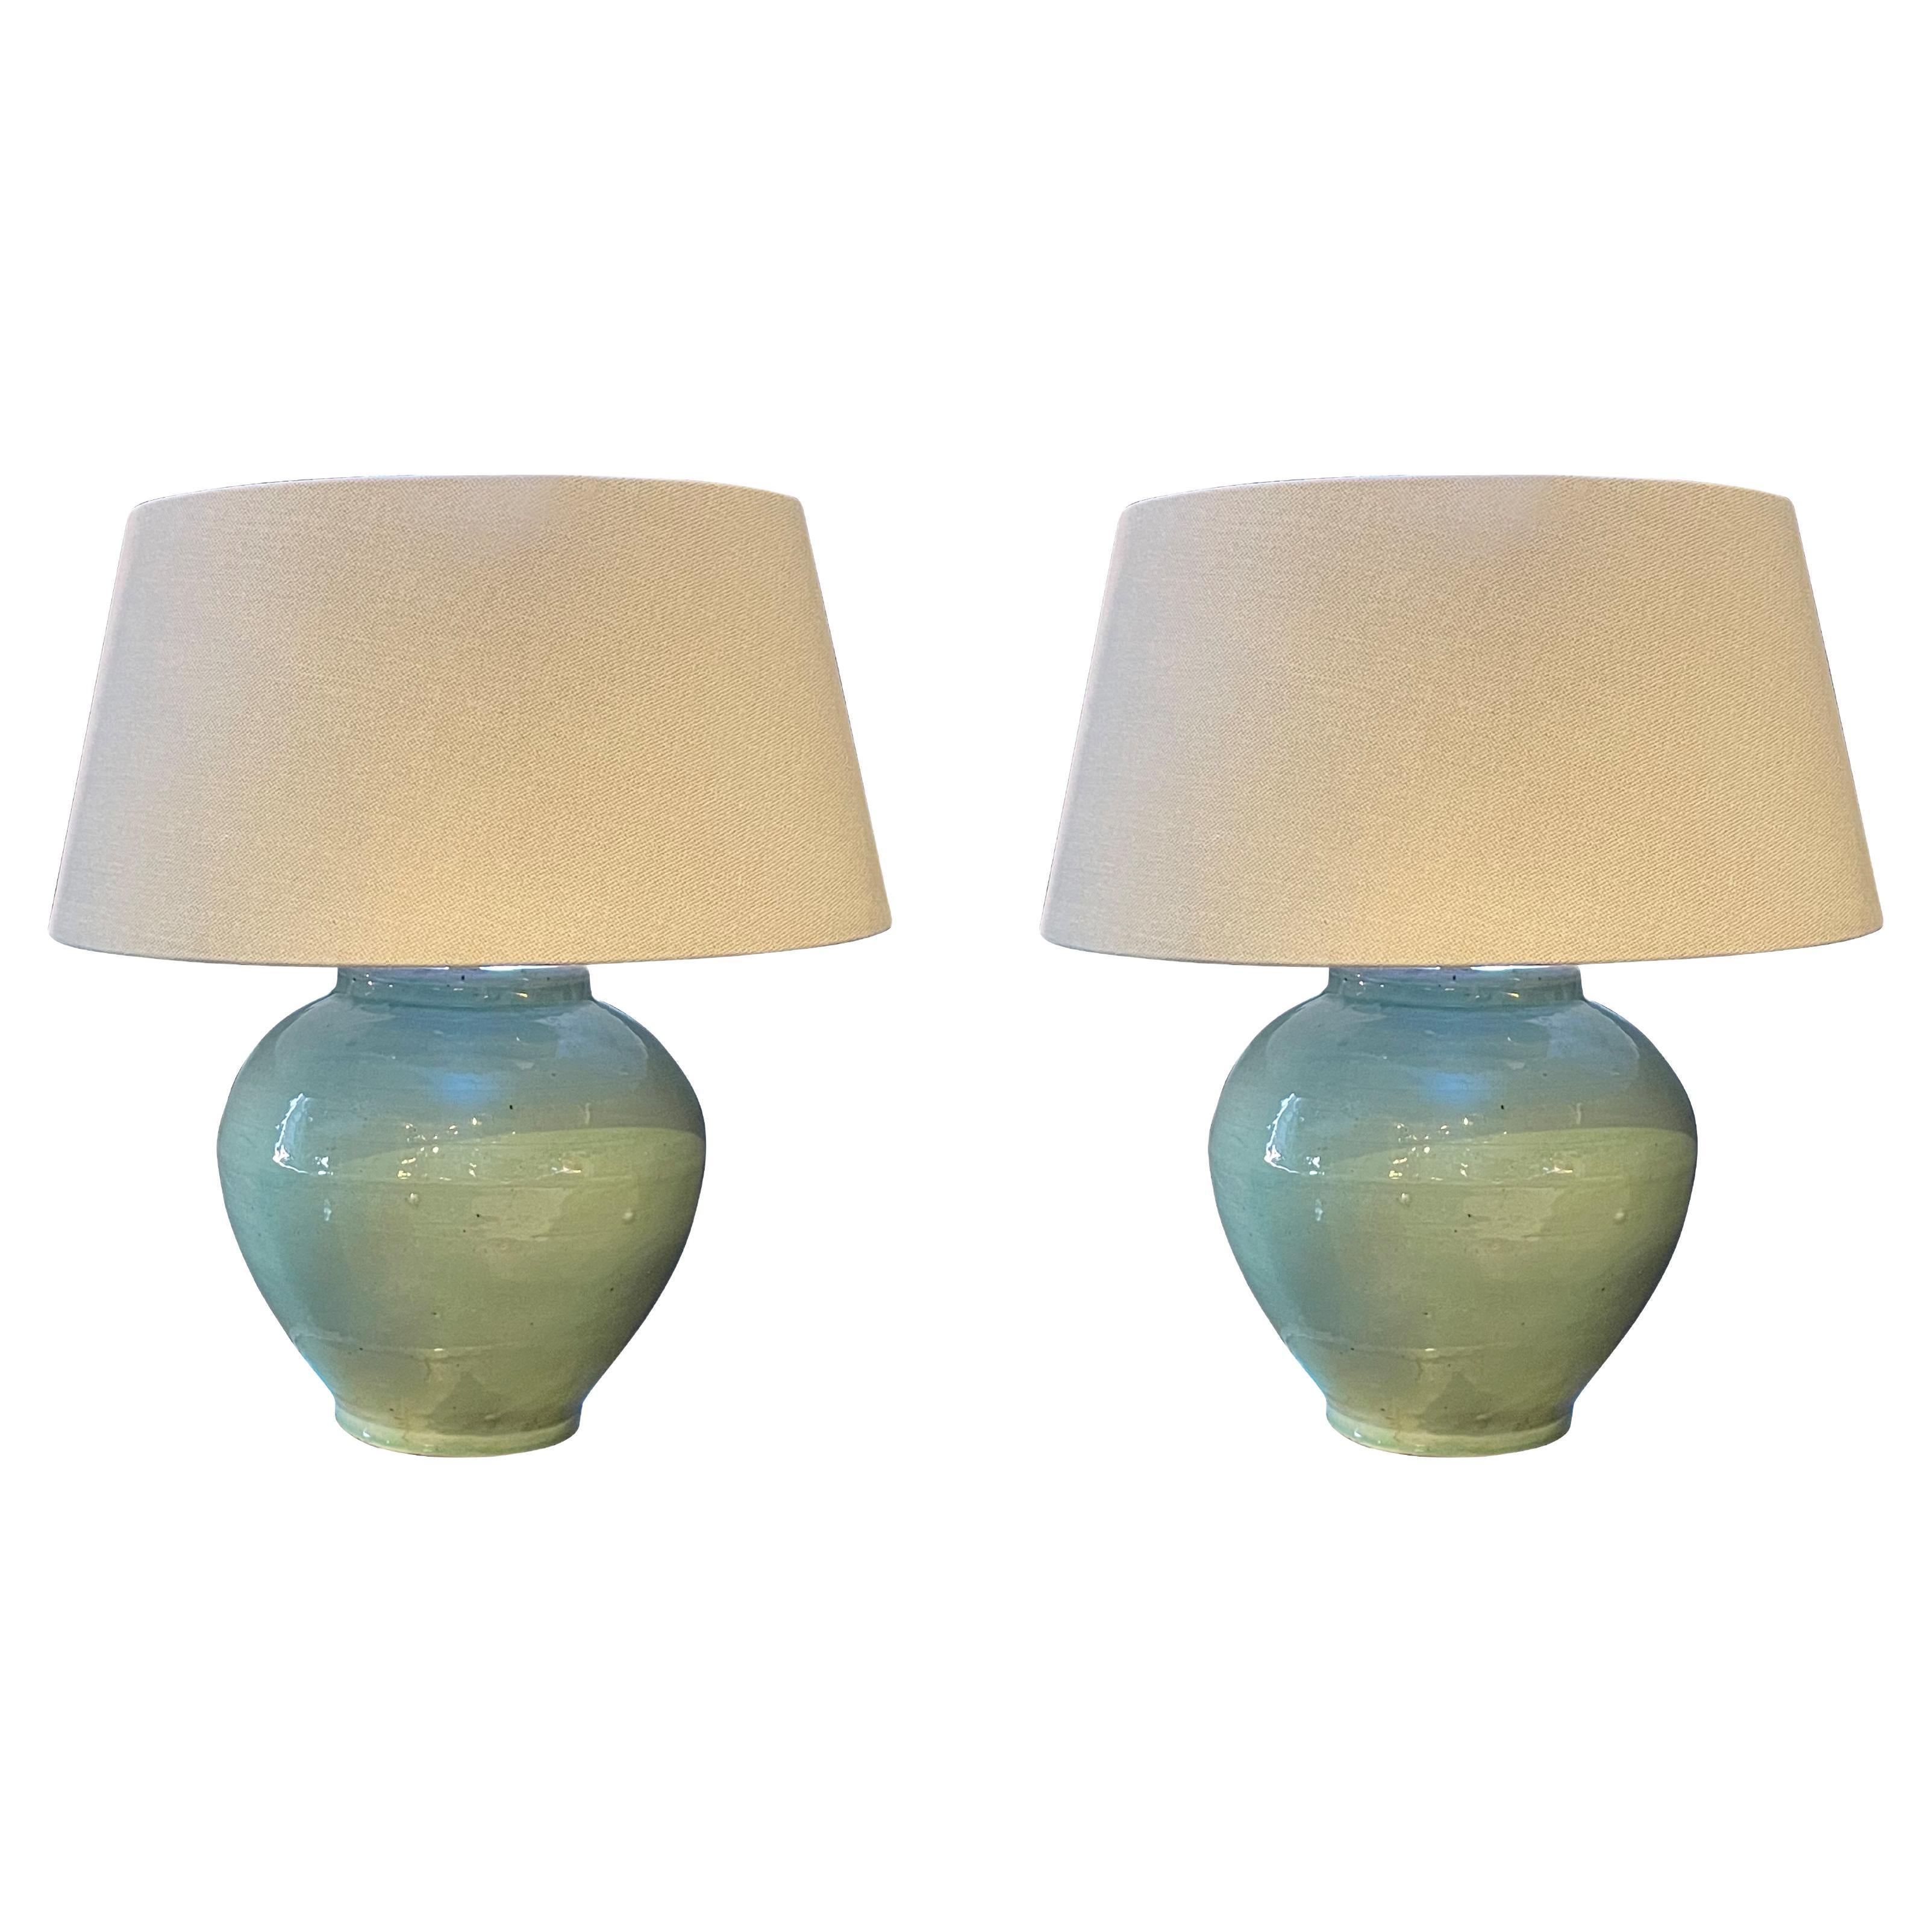 Pale Celadon Glaze Ceramic Pair Of Lamps, China, Contemporary